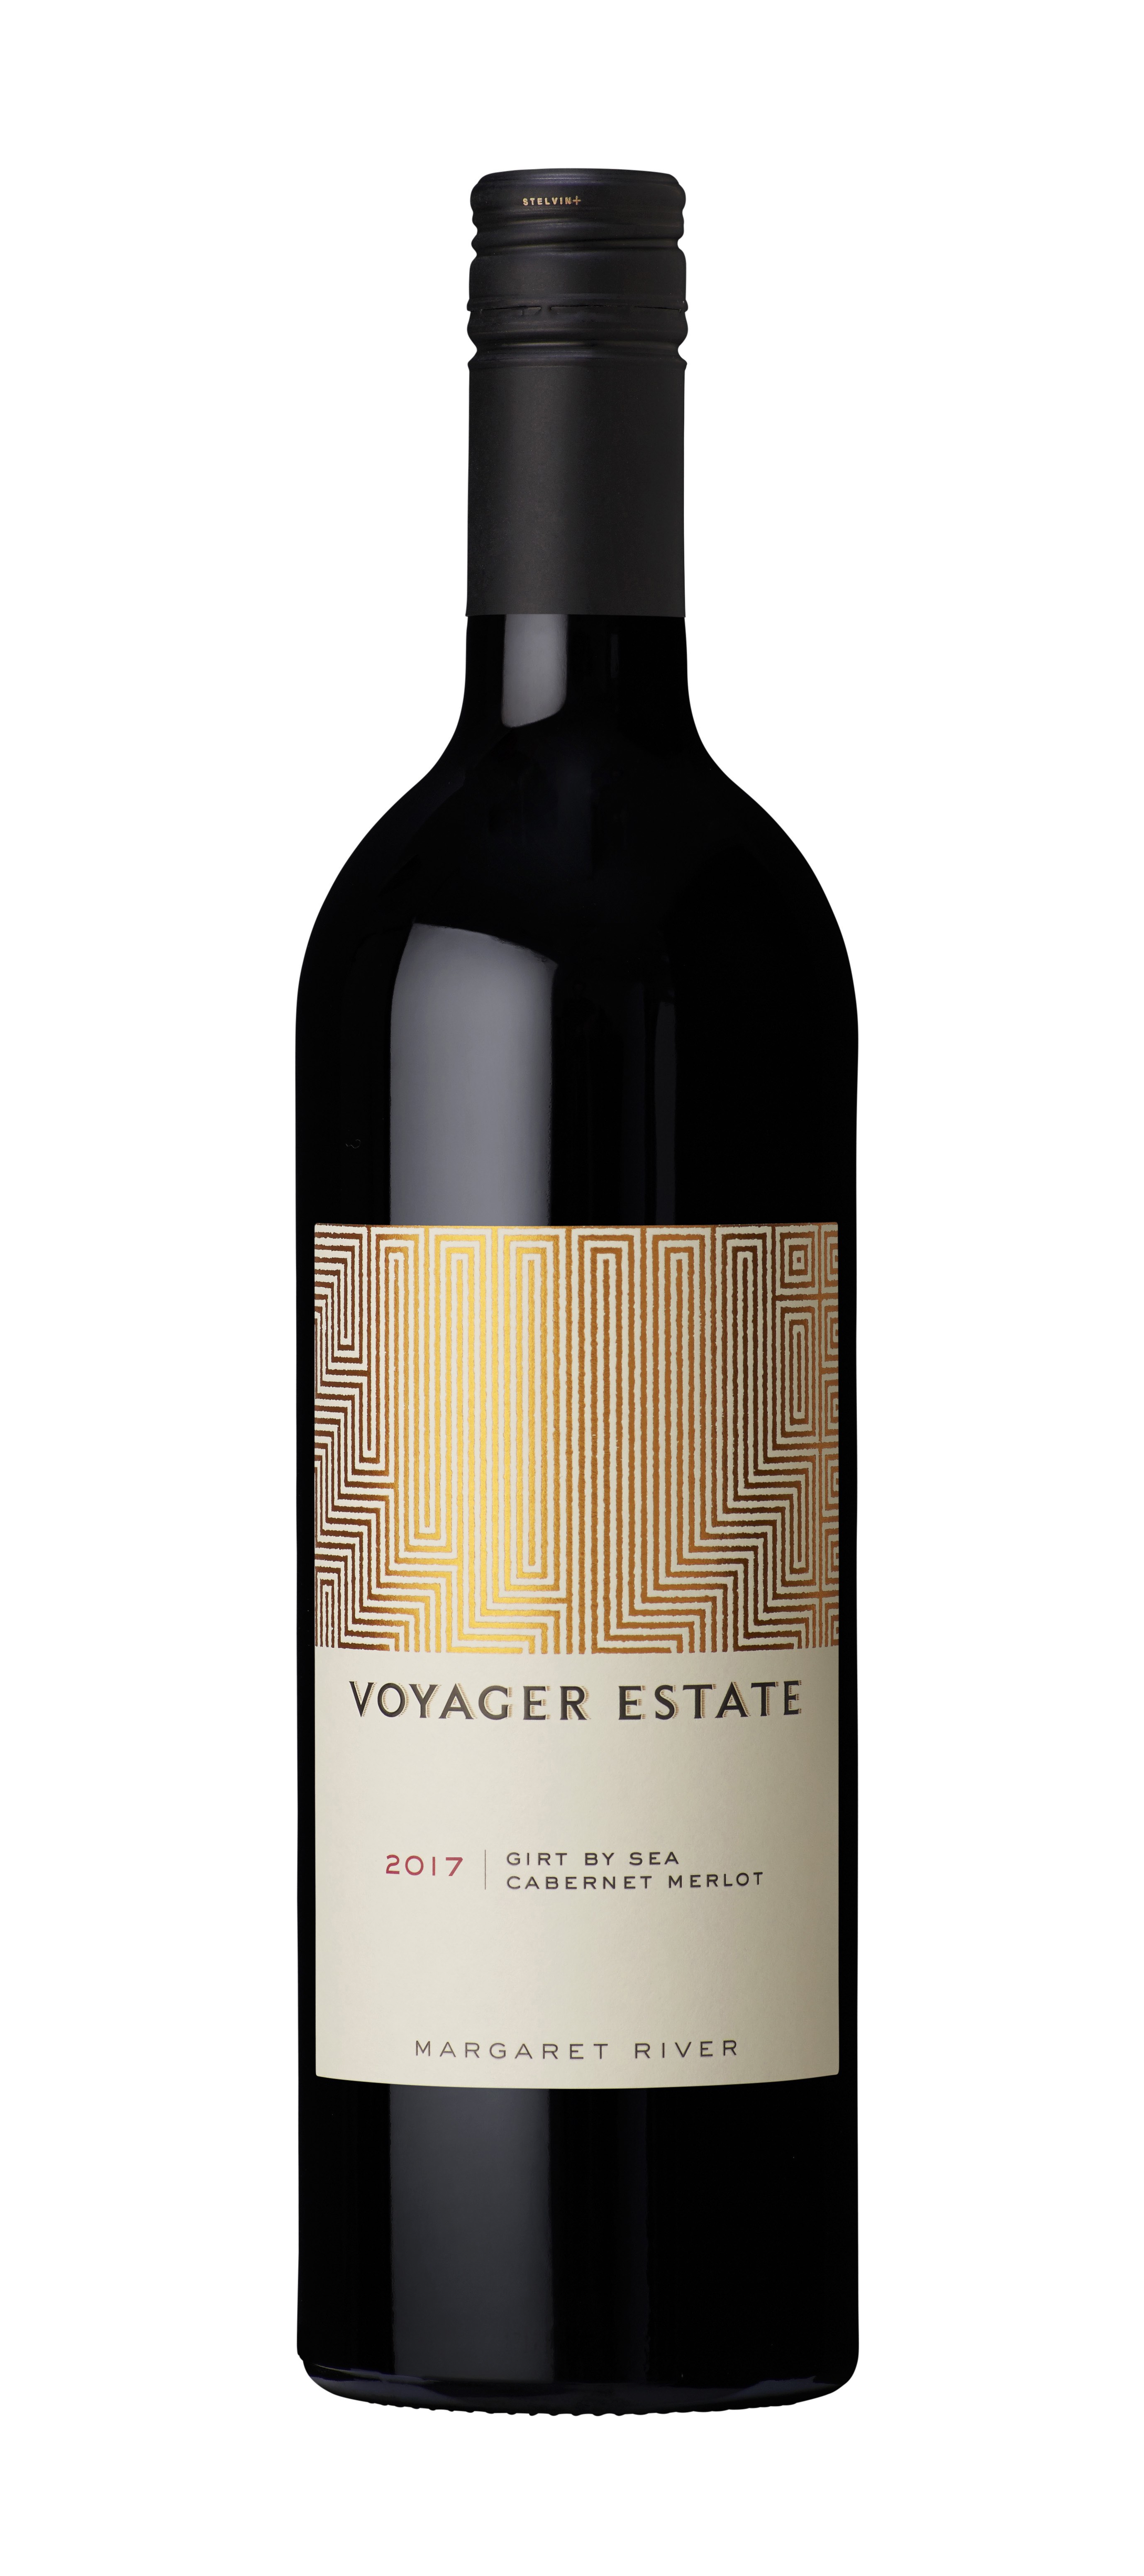 Voyager Estate Girt by Sea Cabernet Merlot 2020 - Wine Goblet